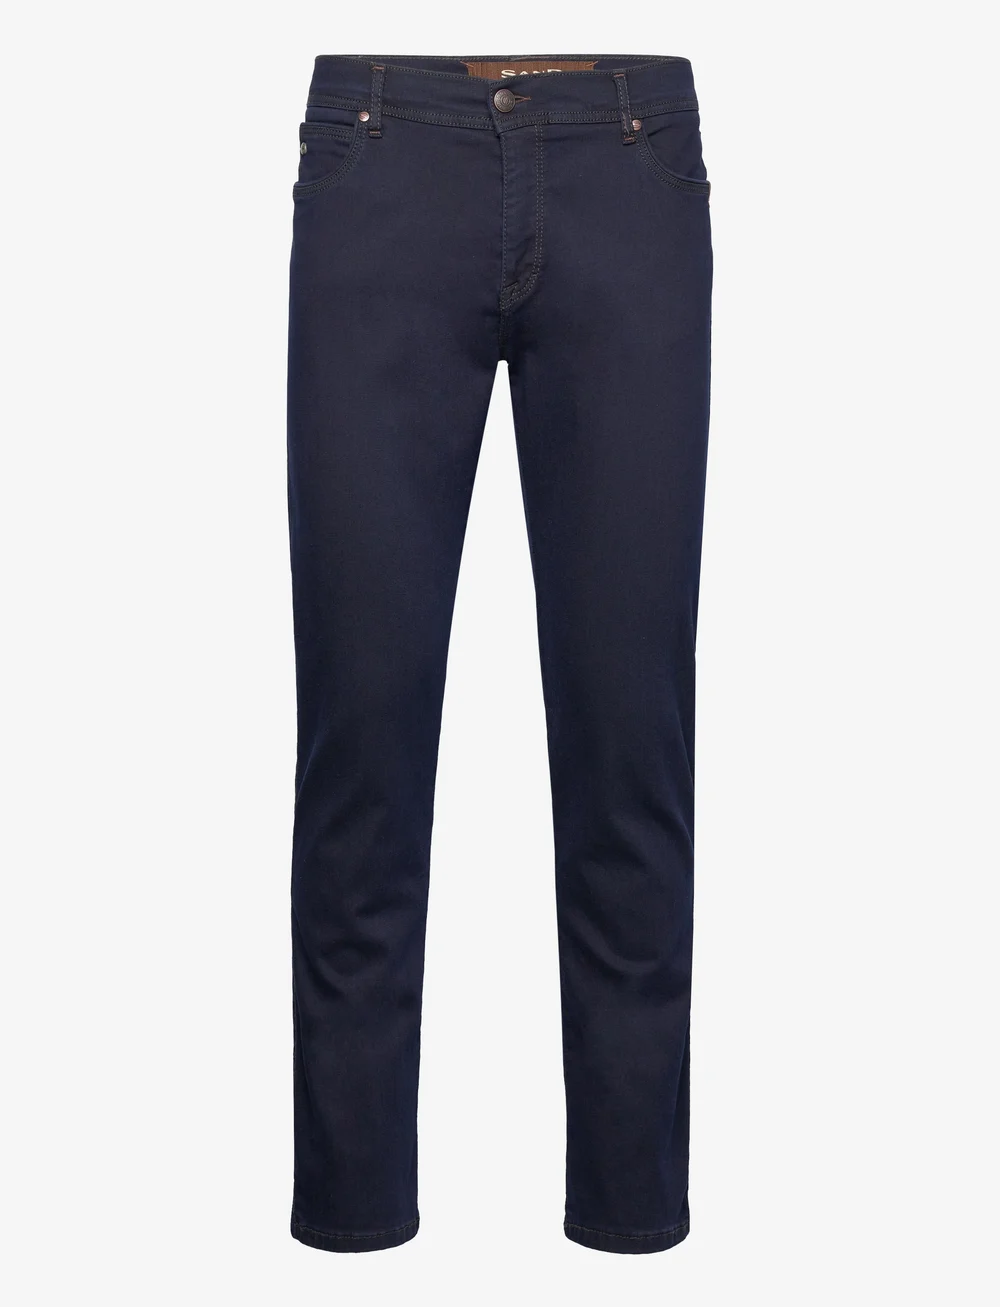 nåde købmand Tolk SAND Suede Touch Denim - Burton Ns 32" - Slim jeans - Boozt.com